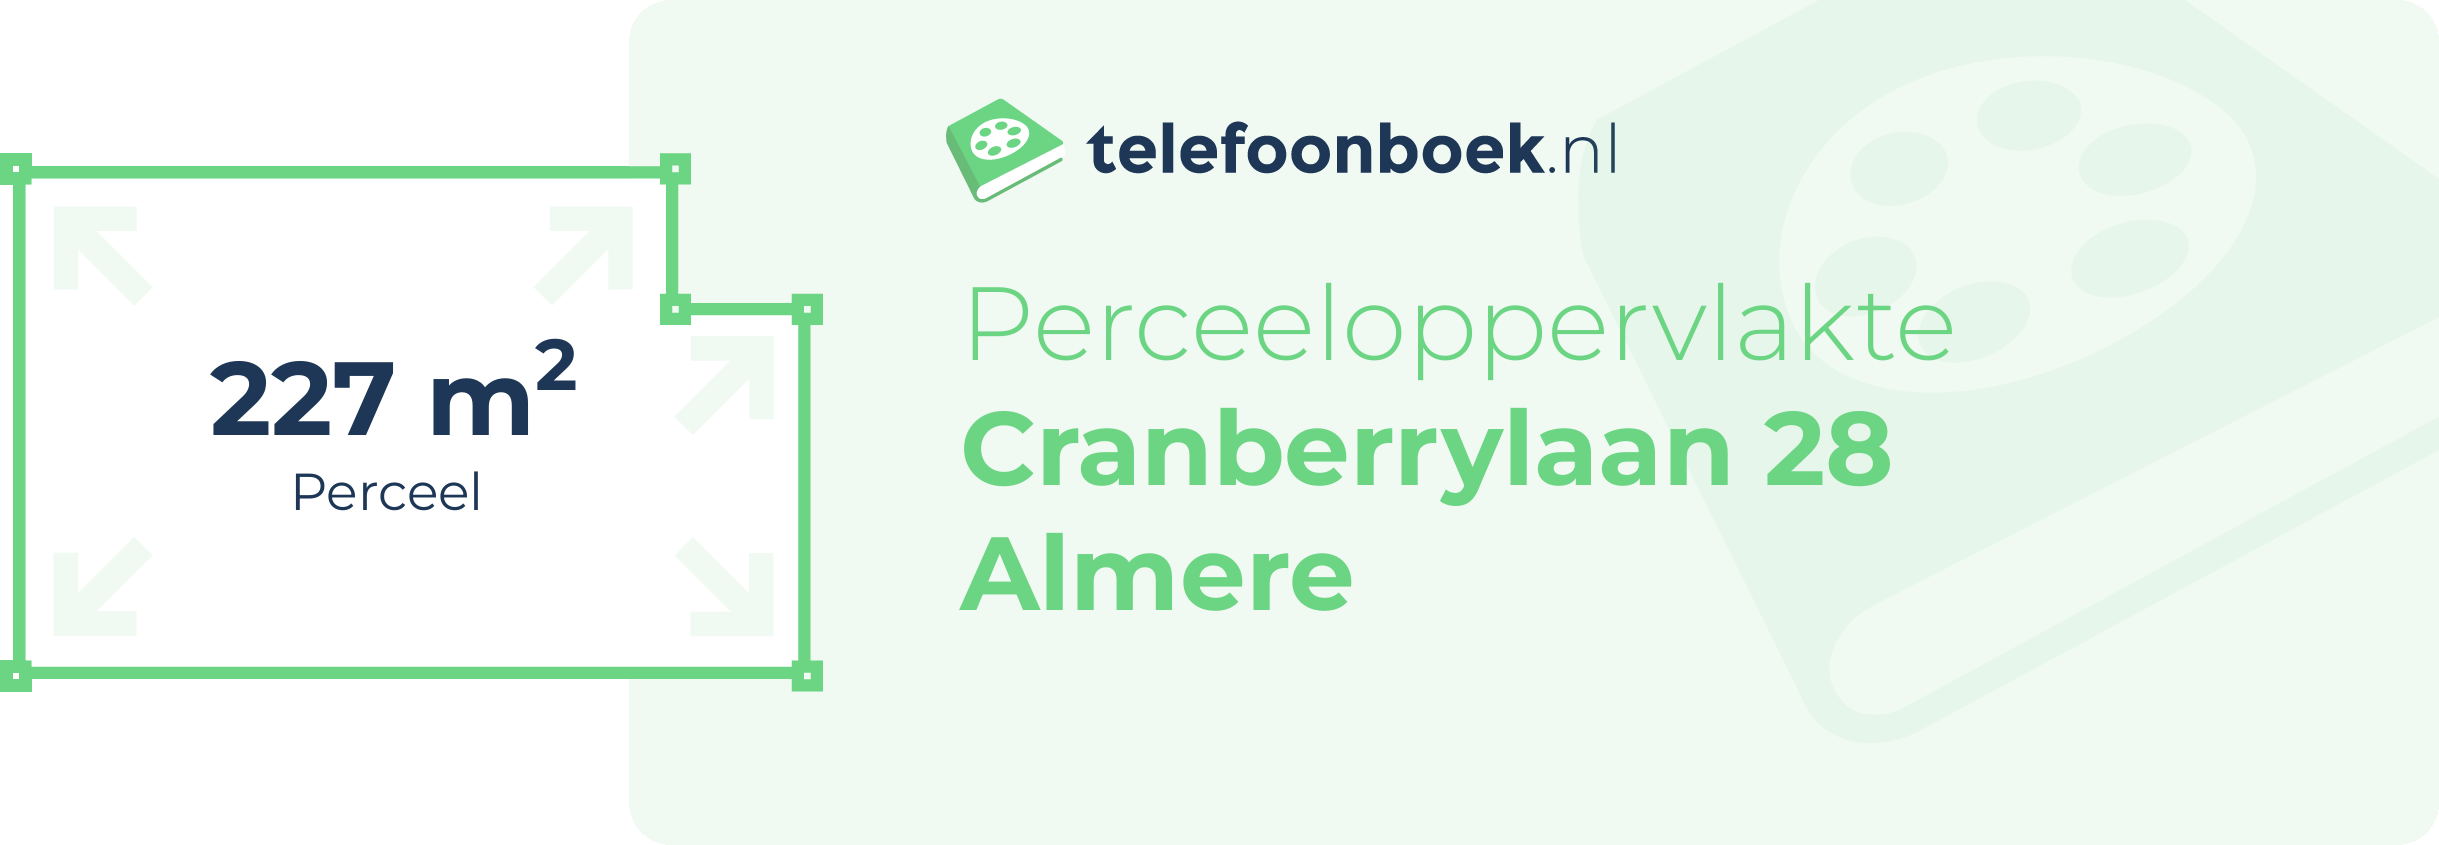 Perceeloppervlakte Cranberrylaan 28 Almere